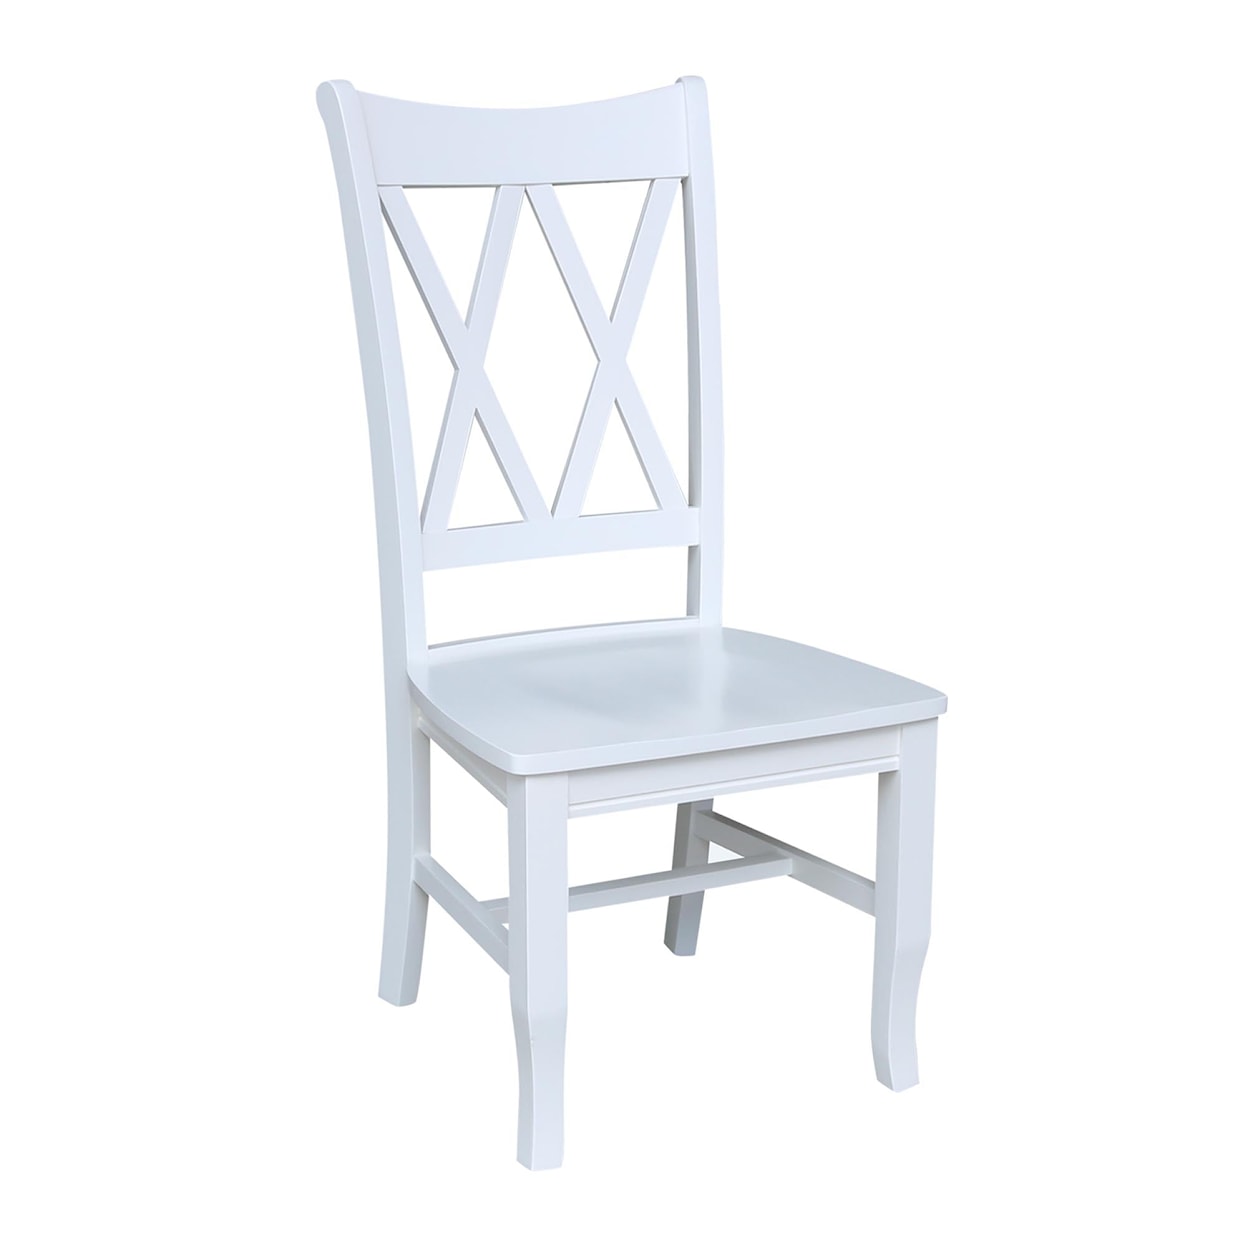 John Thomas Hampton Dbl X Back Chair (Built) in Pure White